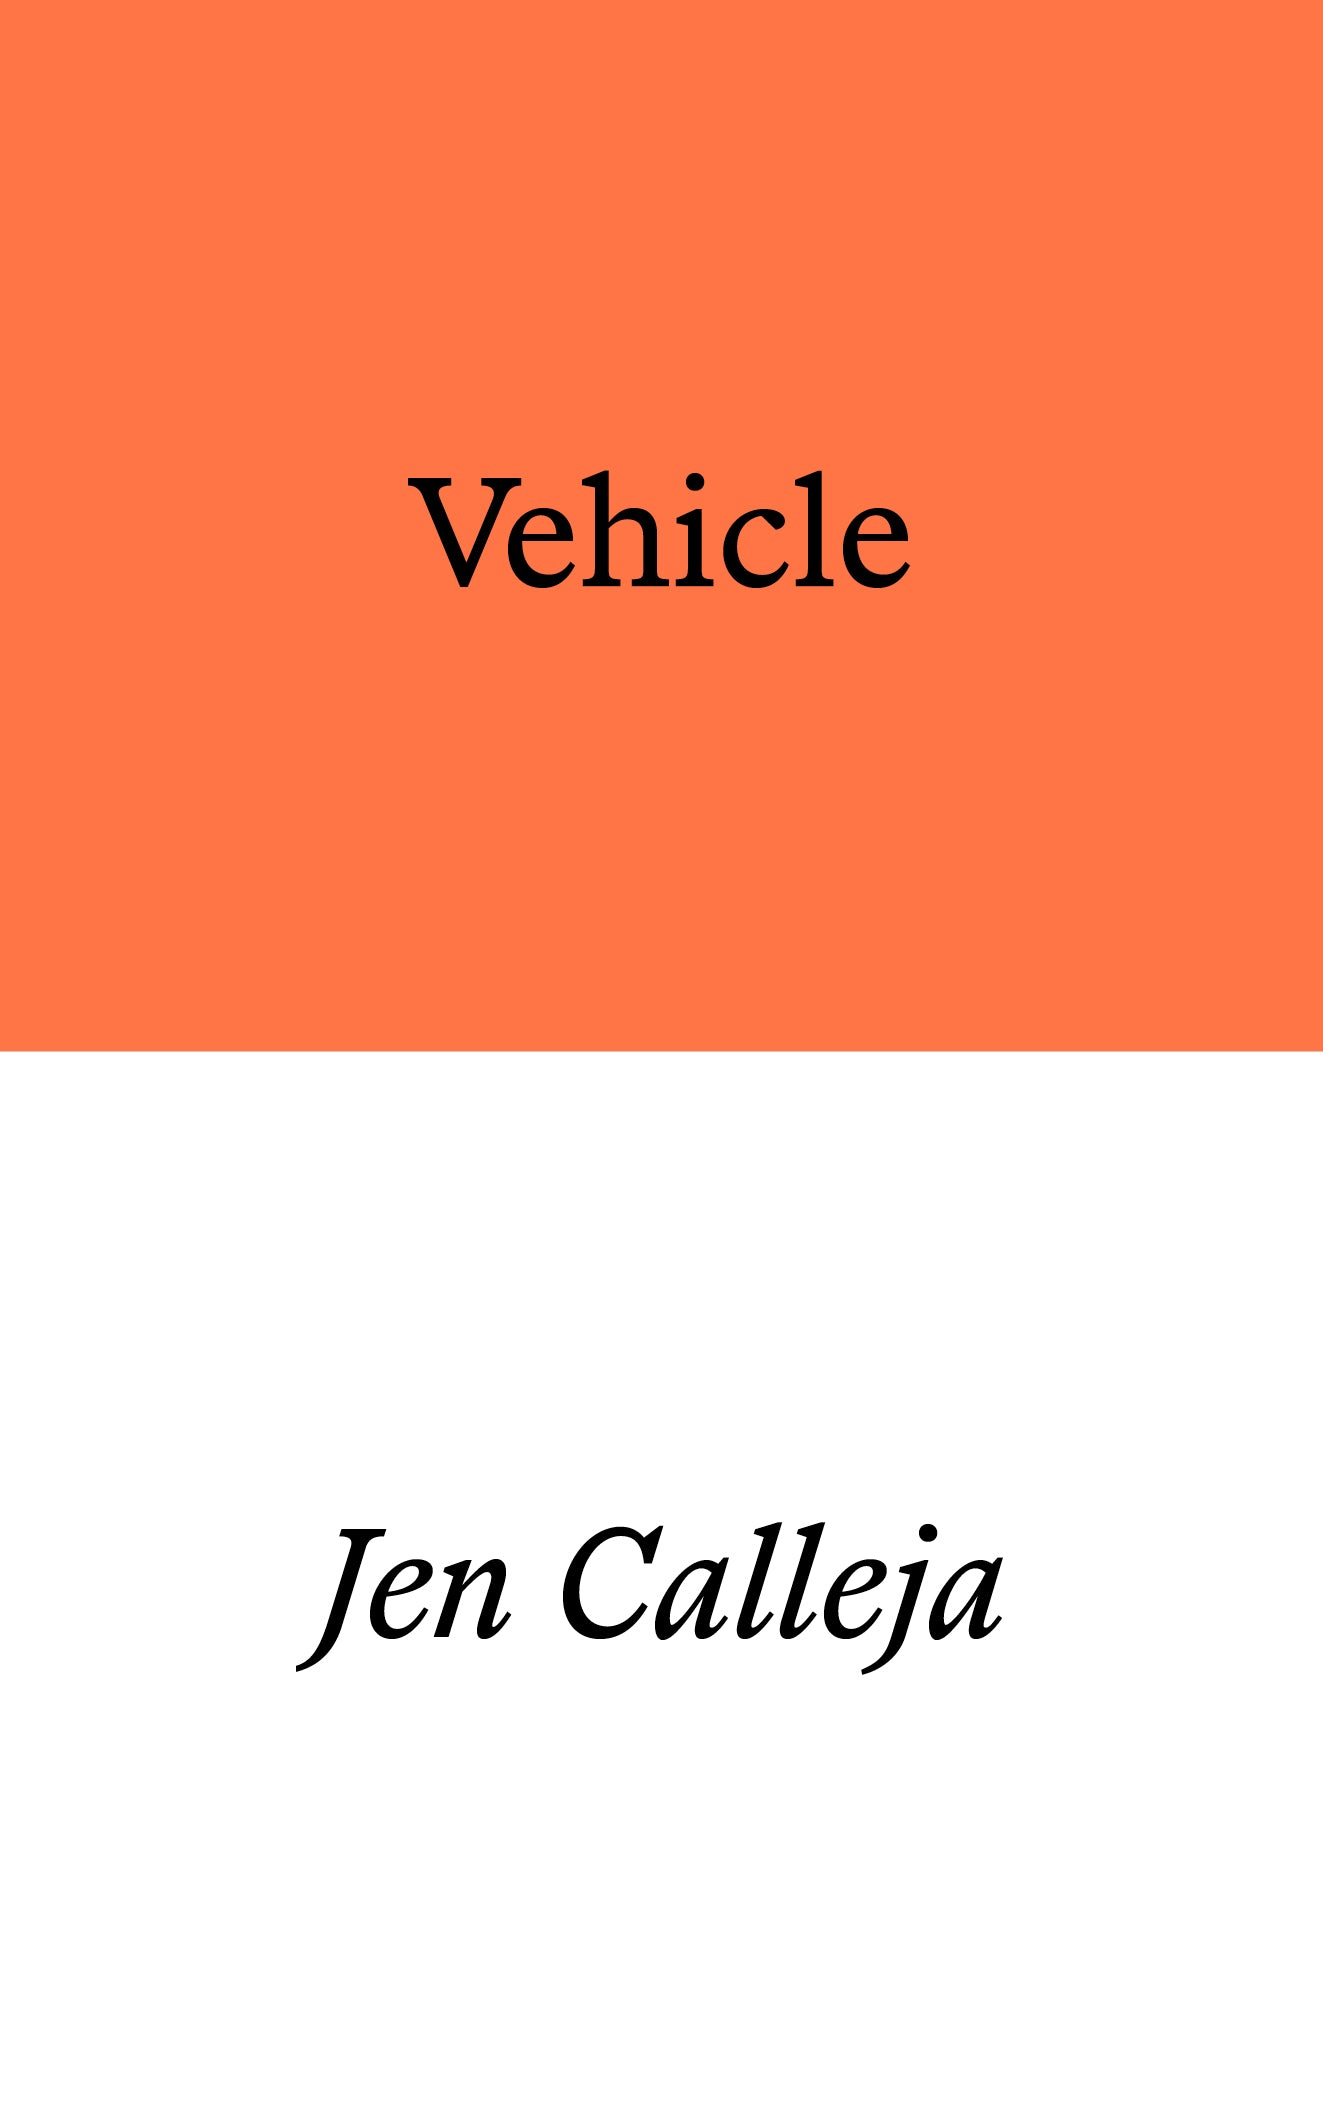 Vehicle with Jen Calleja - Book & Ticket Option